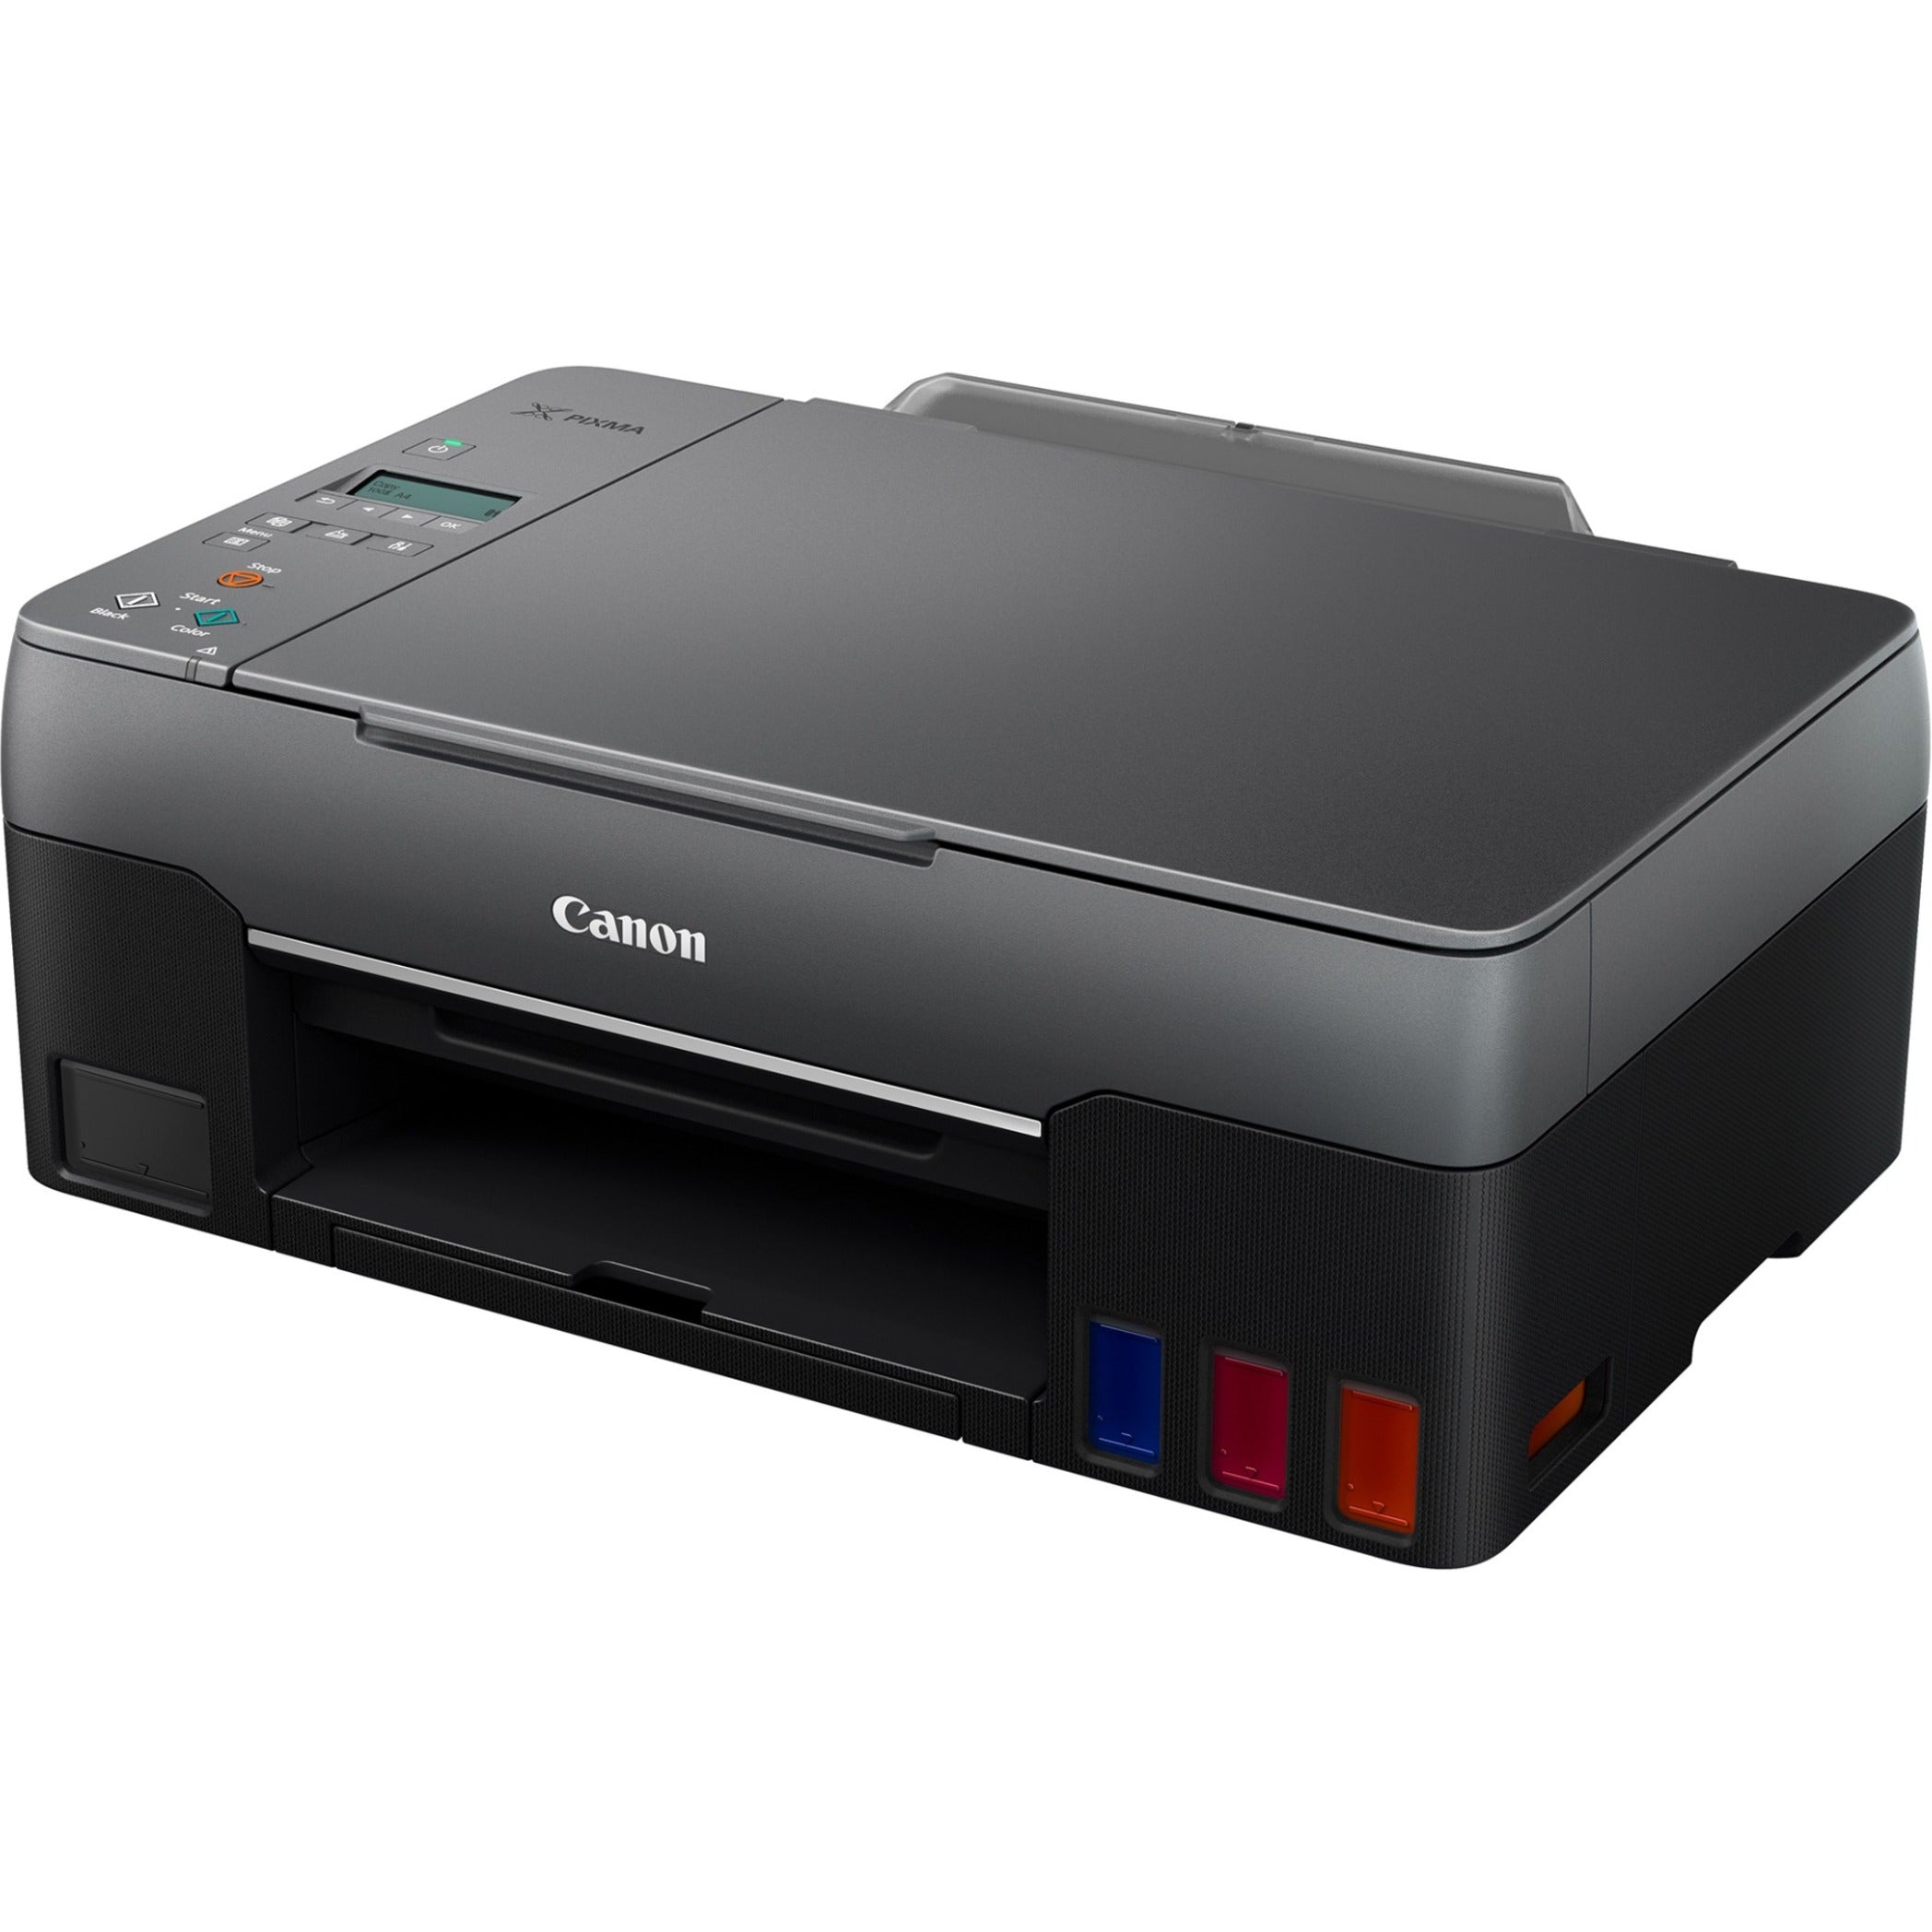 Canon 4466C002 PIXMA G2260 MegaTank All-in-One Printer, Color Inkjet Multifunction Printer